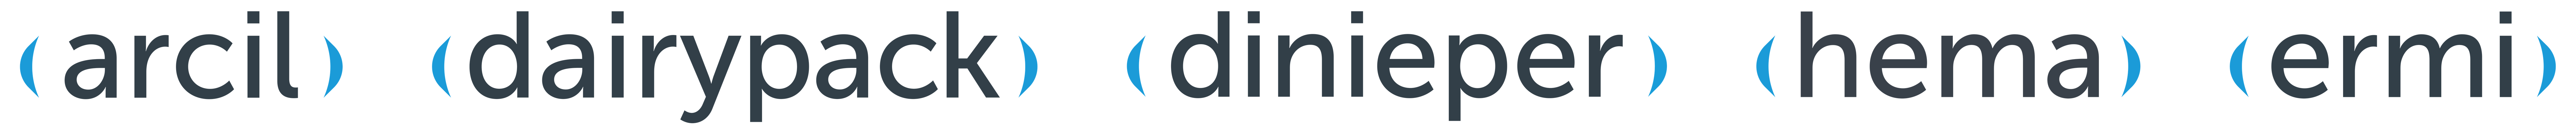 Synerlink brands logos